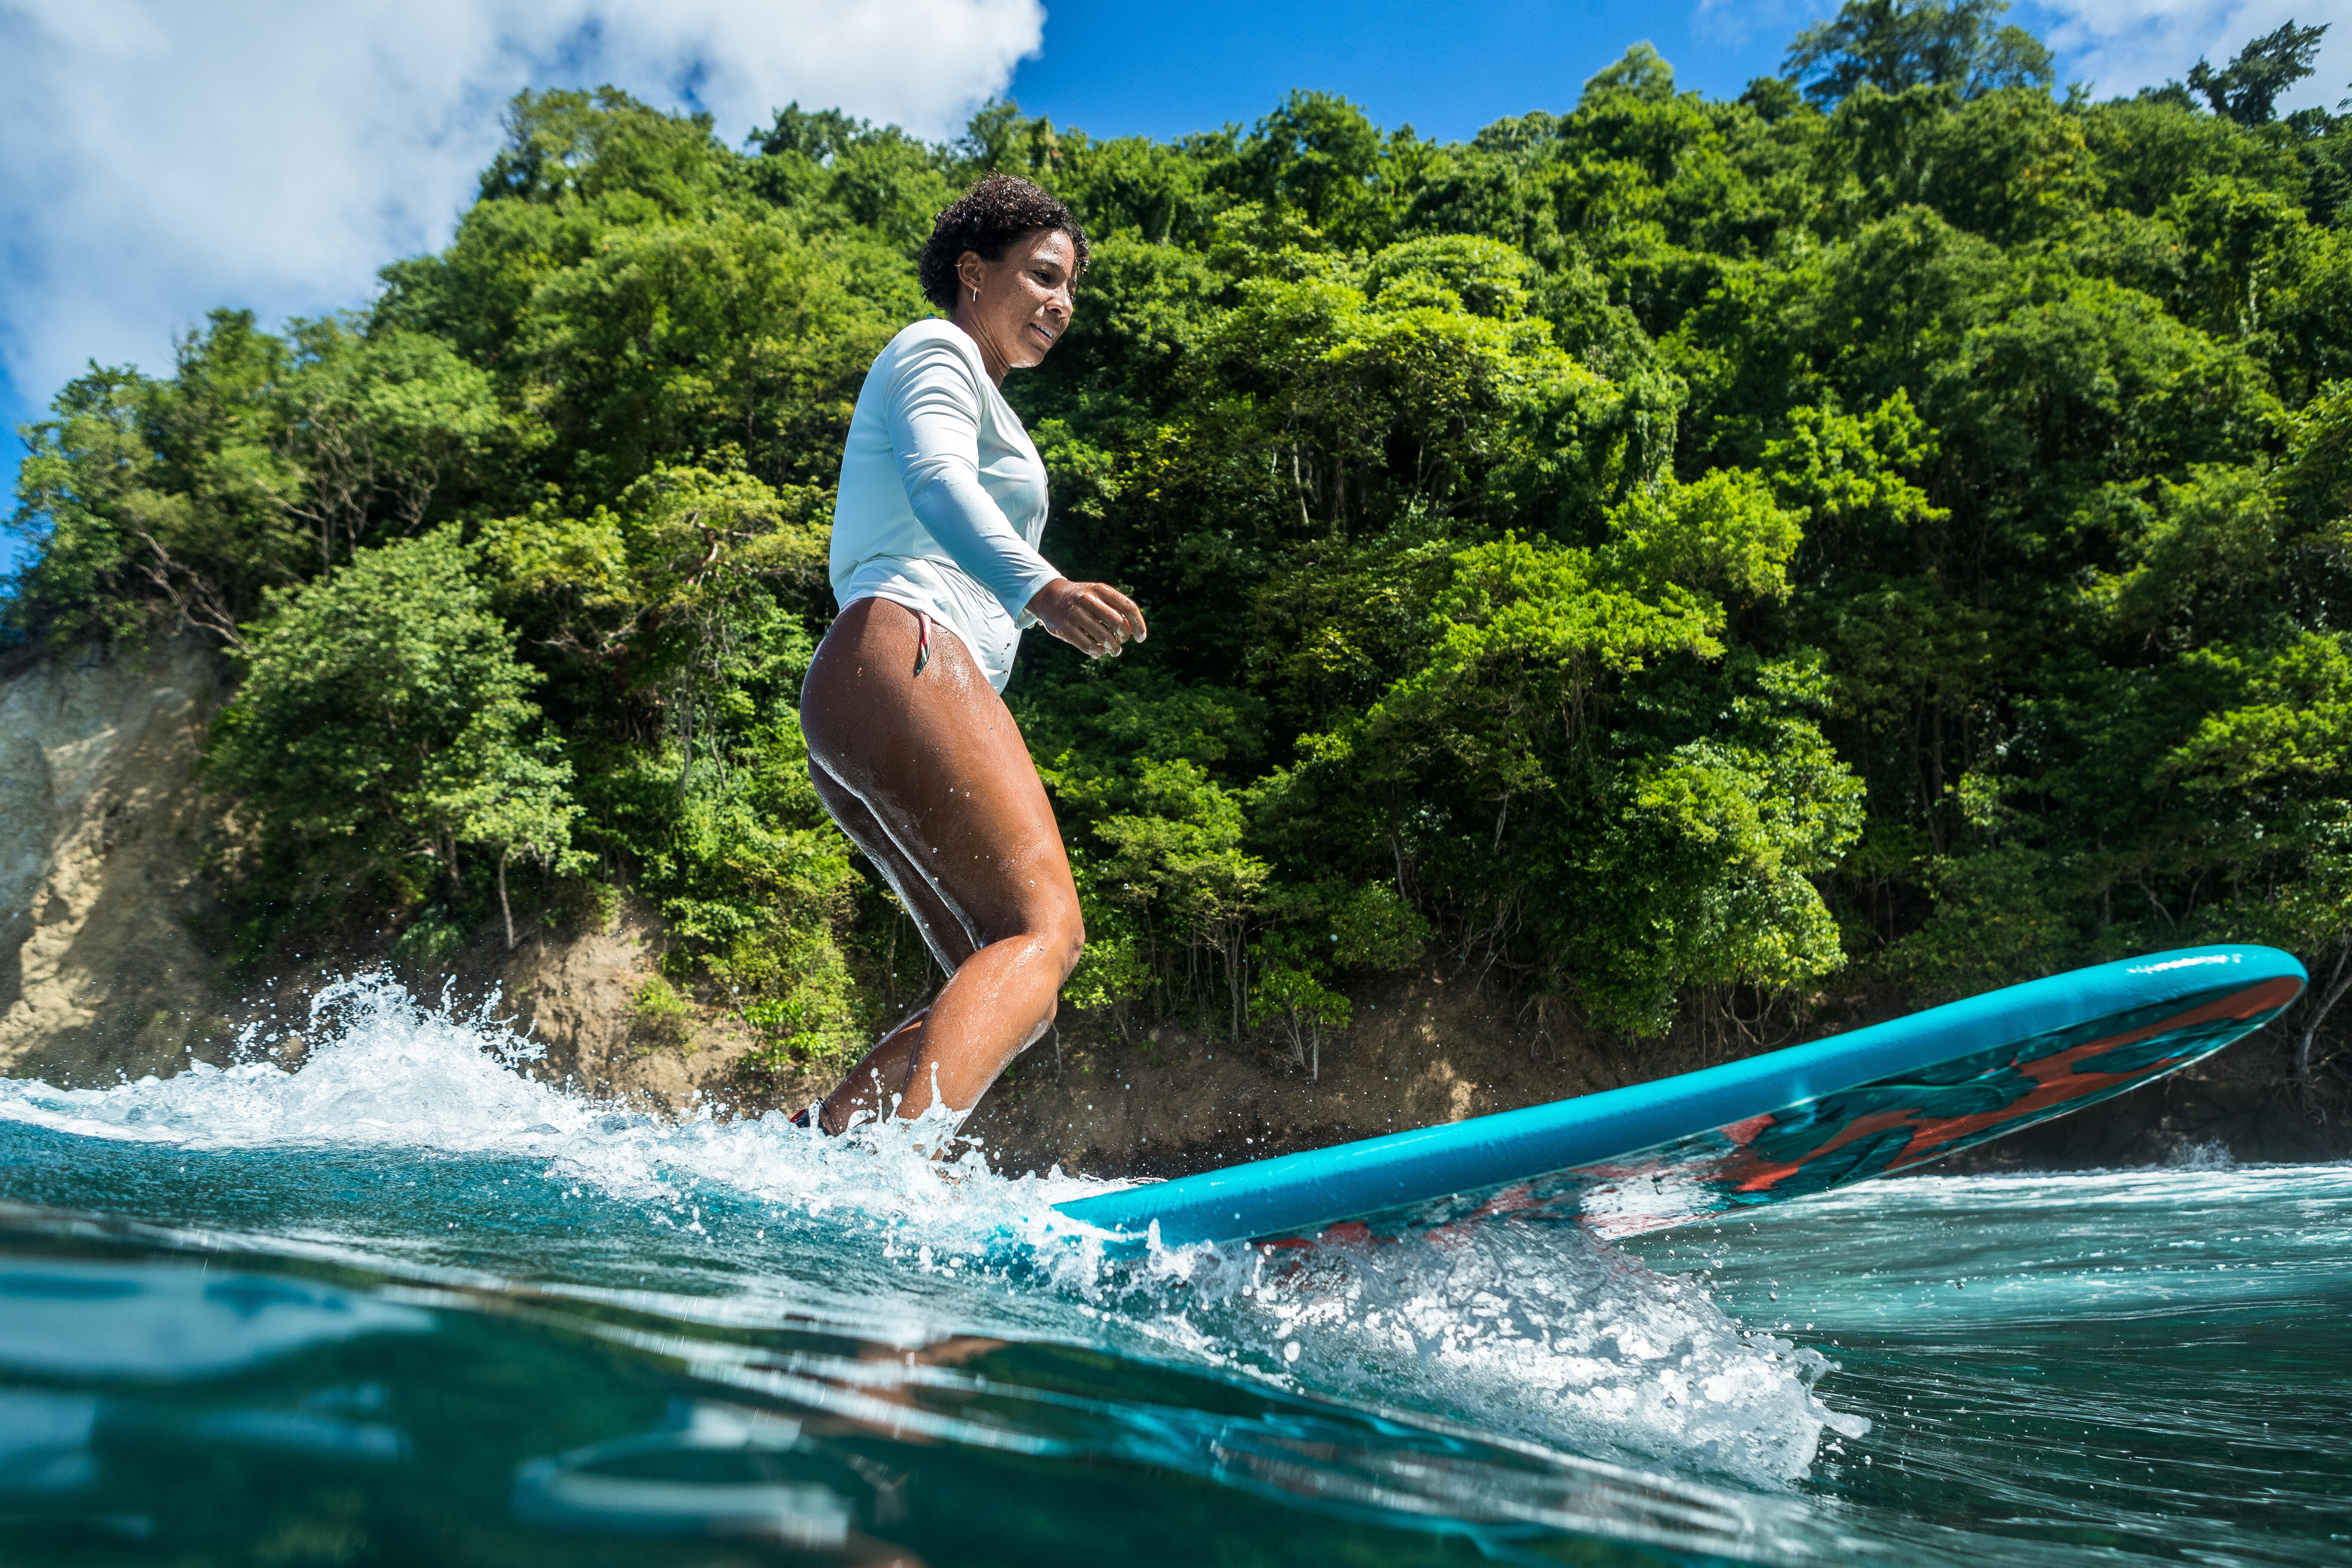 Women’s Anti-UV Long-Sleeve Surfing Rash Guard - 100 Greige - OLAIAN